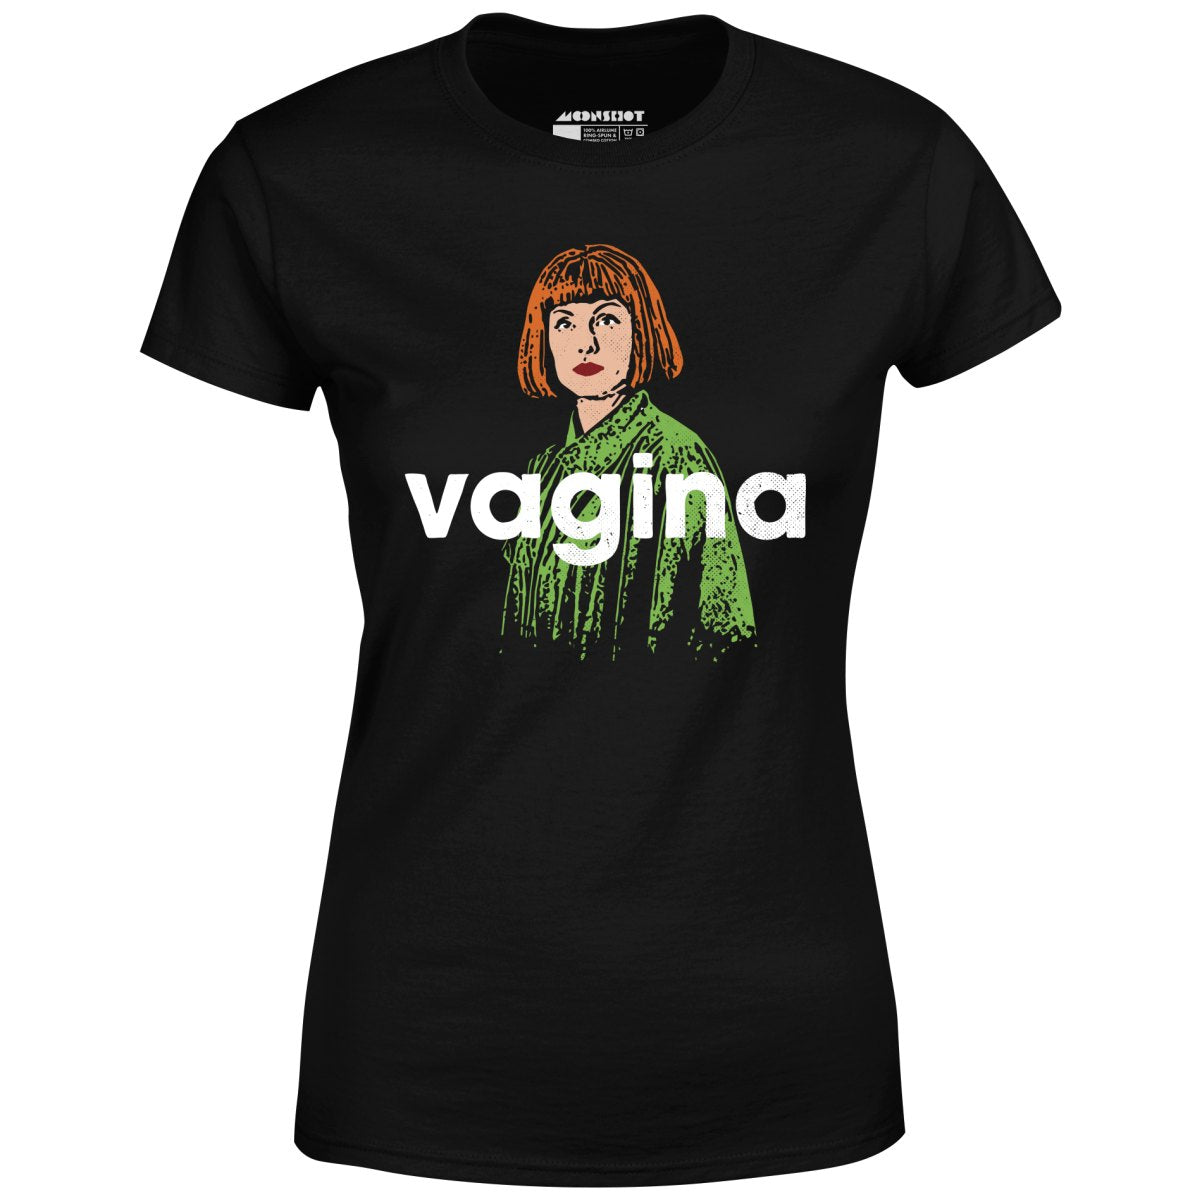 Maude Lebowski - Vagina - Women's T-Shirt